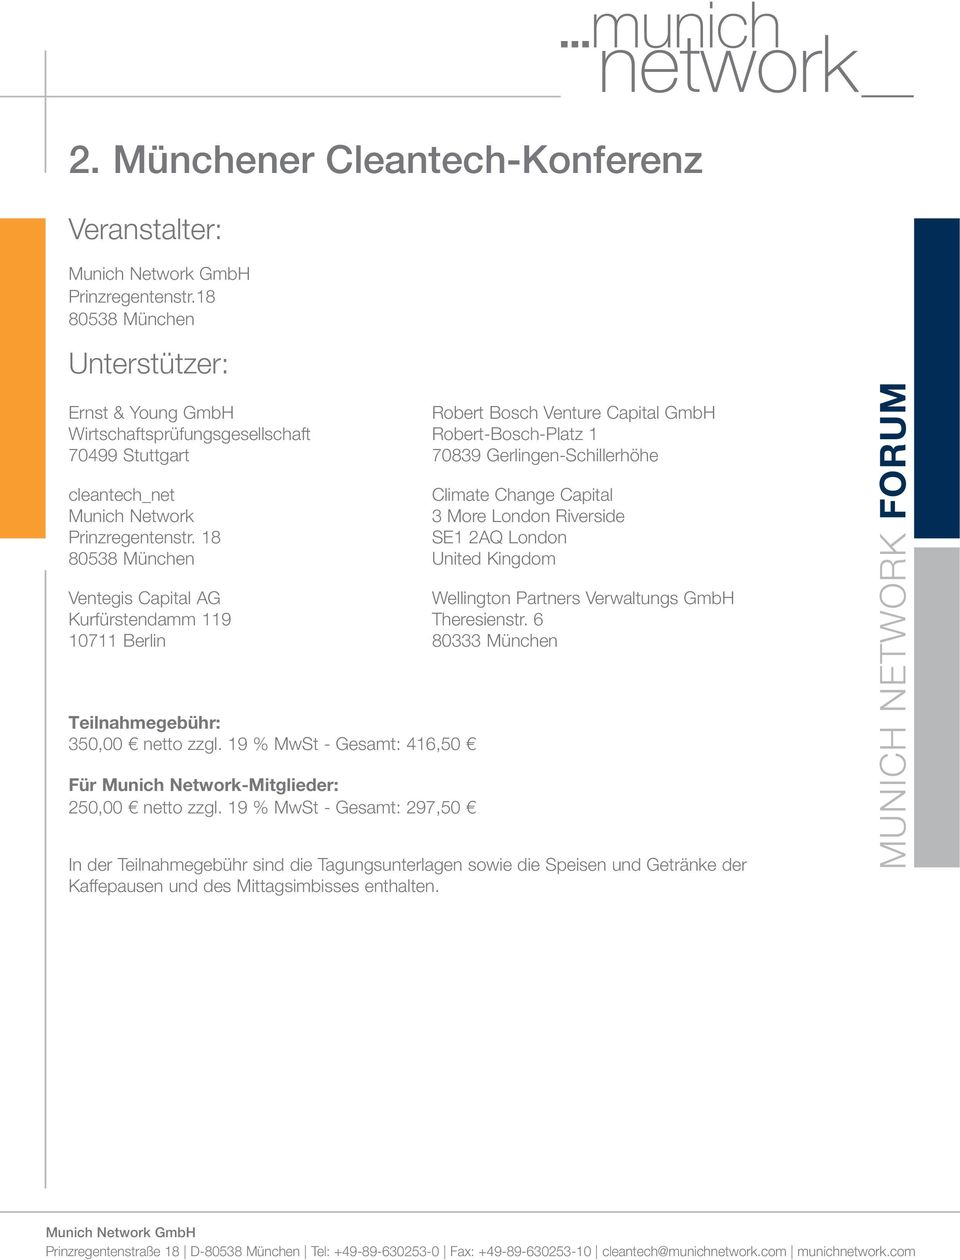 cleantech_net Climate Change Capital Munich Network 3 More London Riverside Prinzregentenstr.